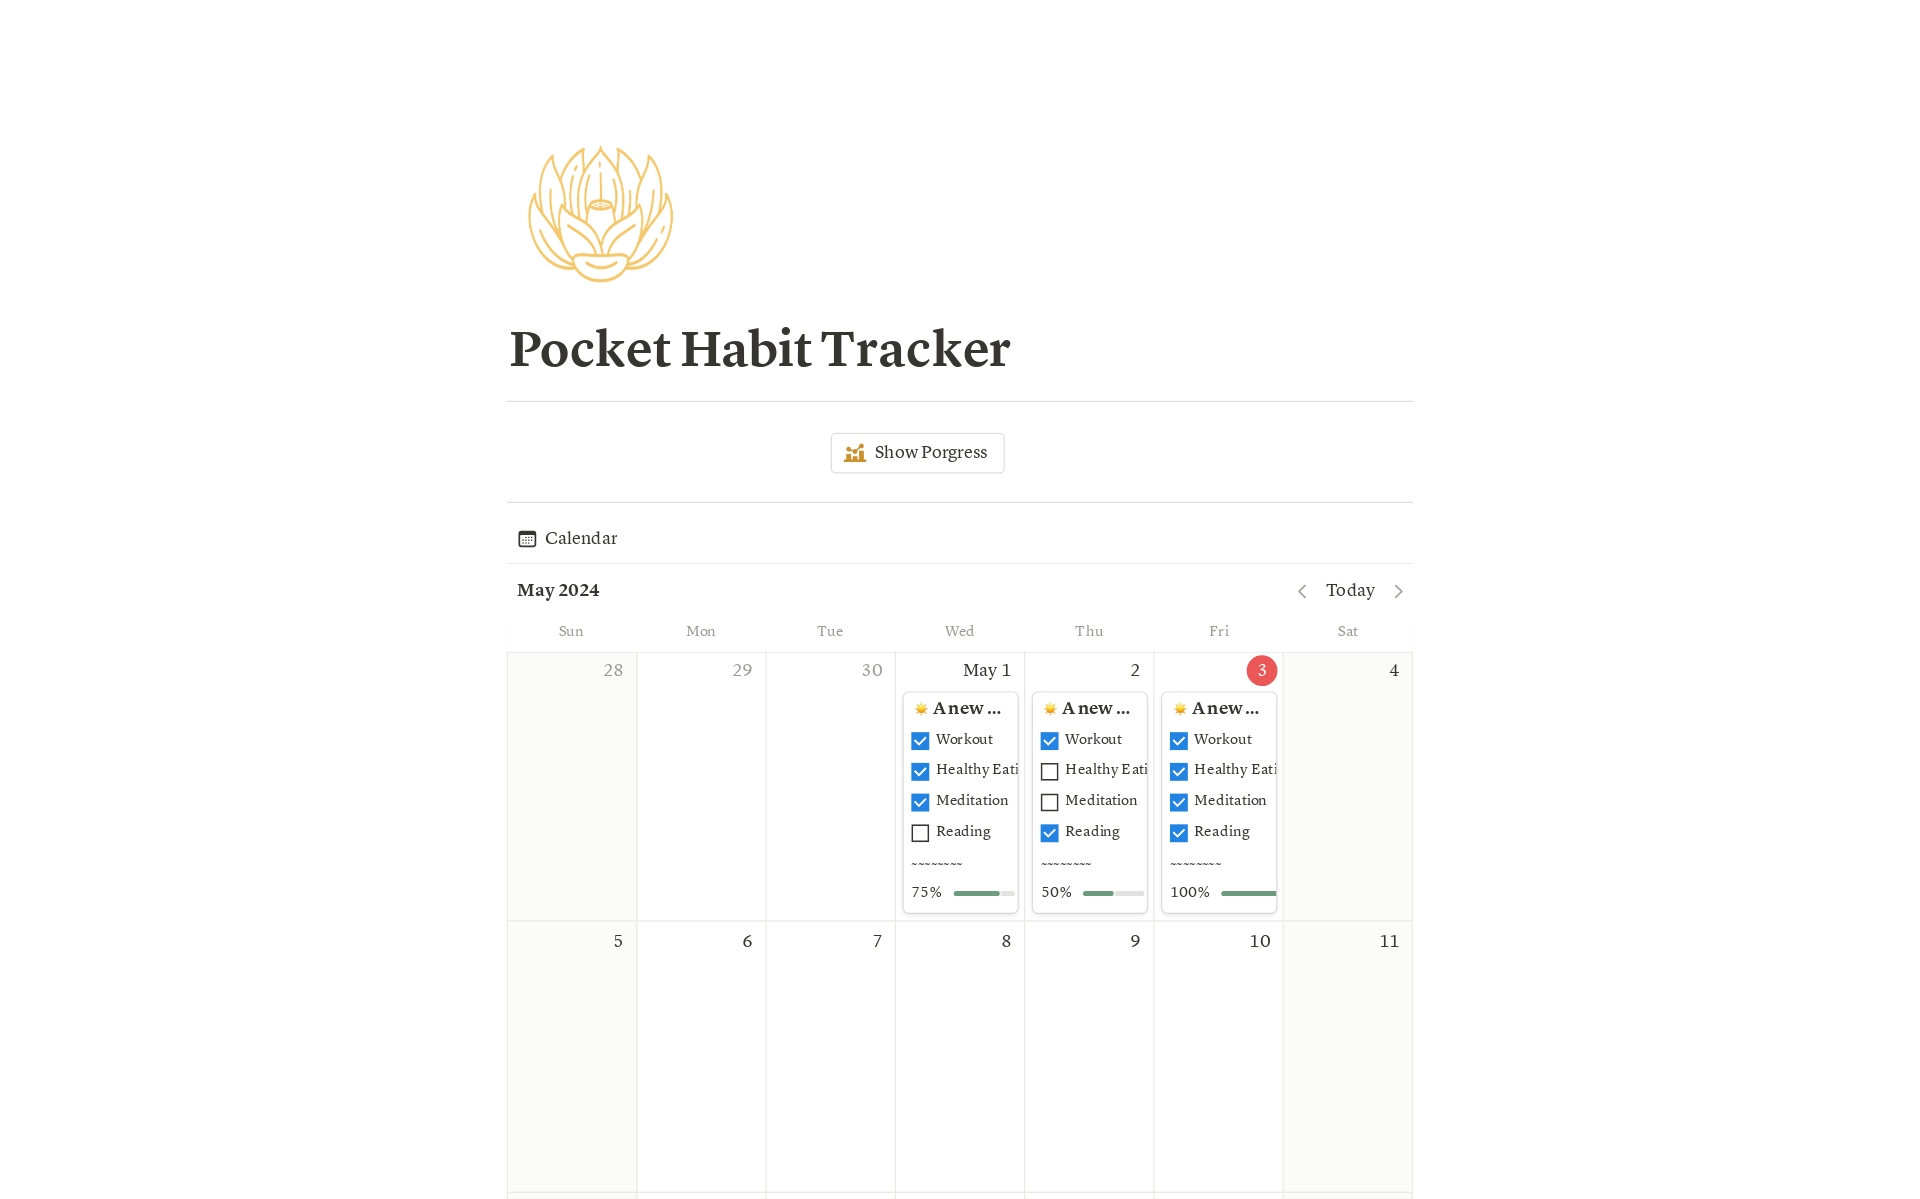 Vista previa de una plantilla para Pocket Habit Tracker